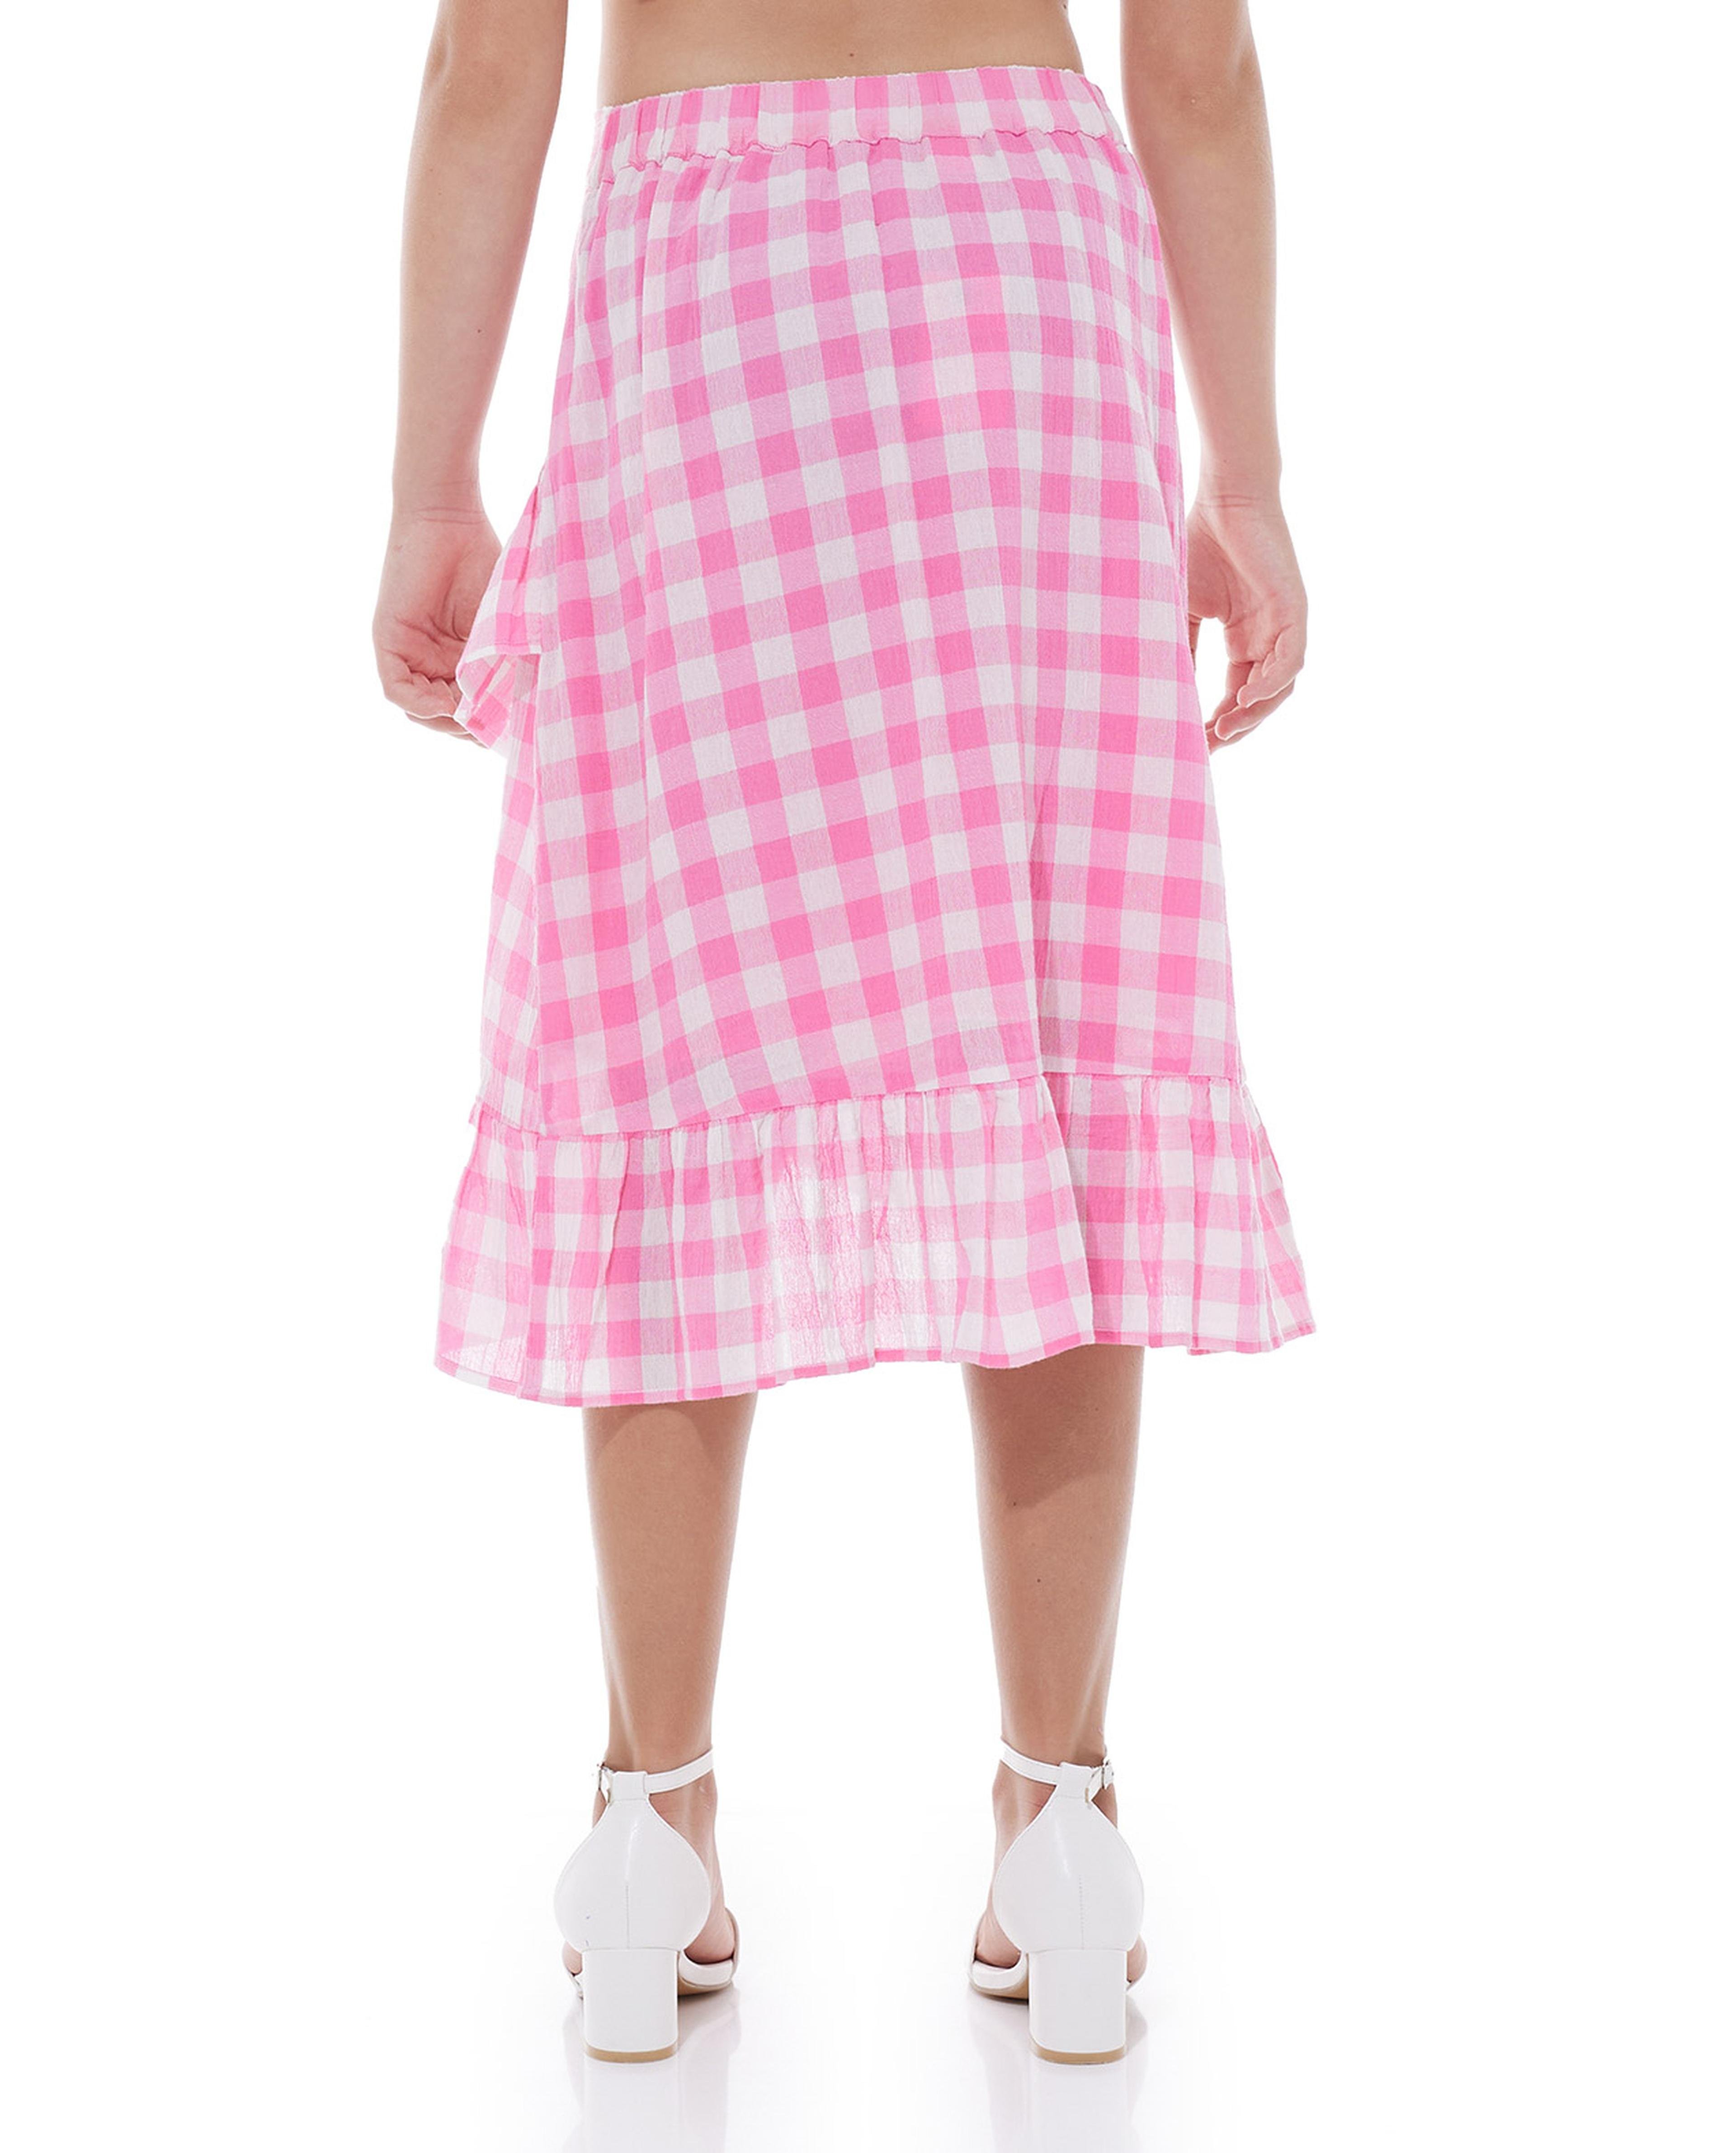 Checkered Skirt with Elastic Waist